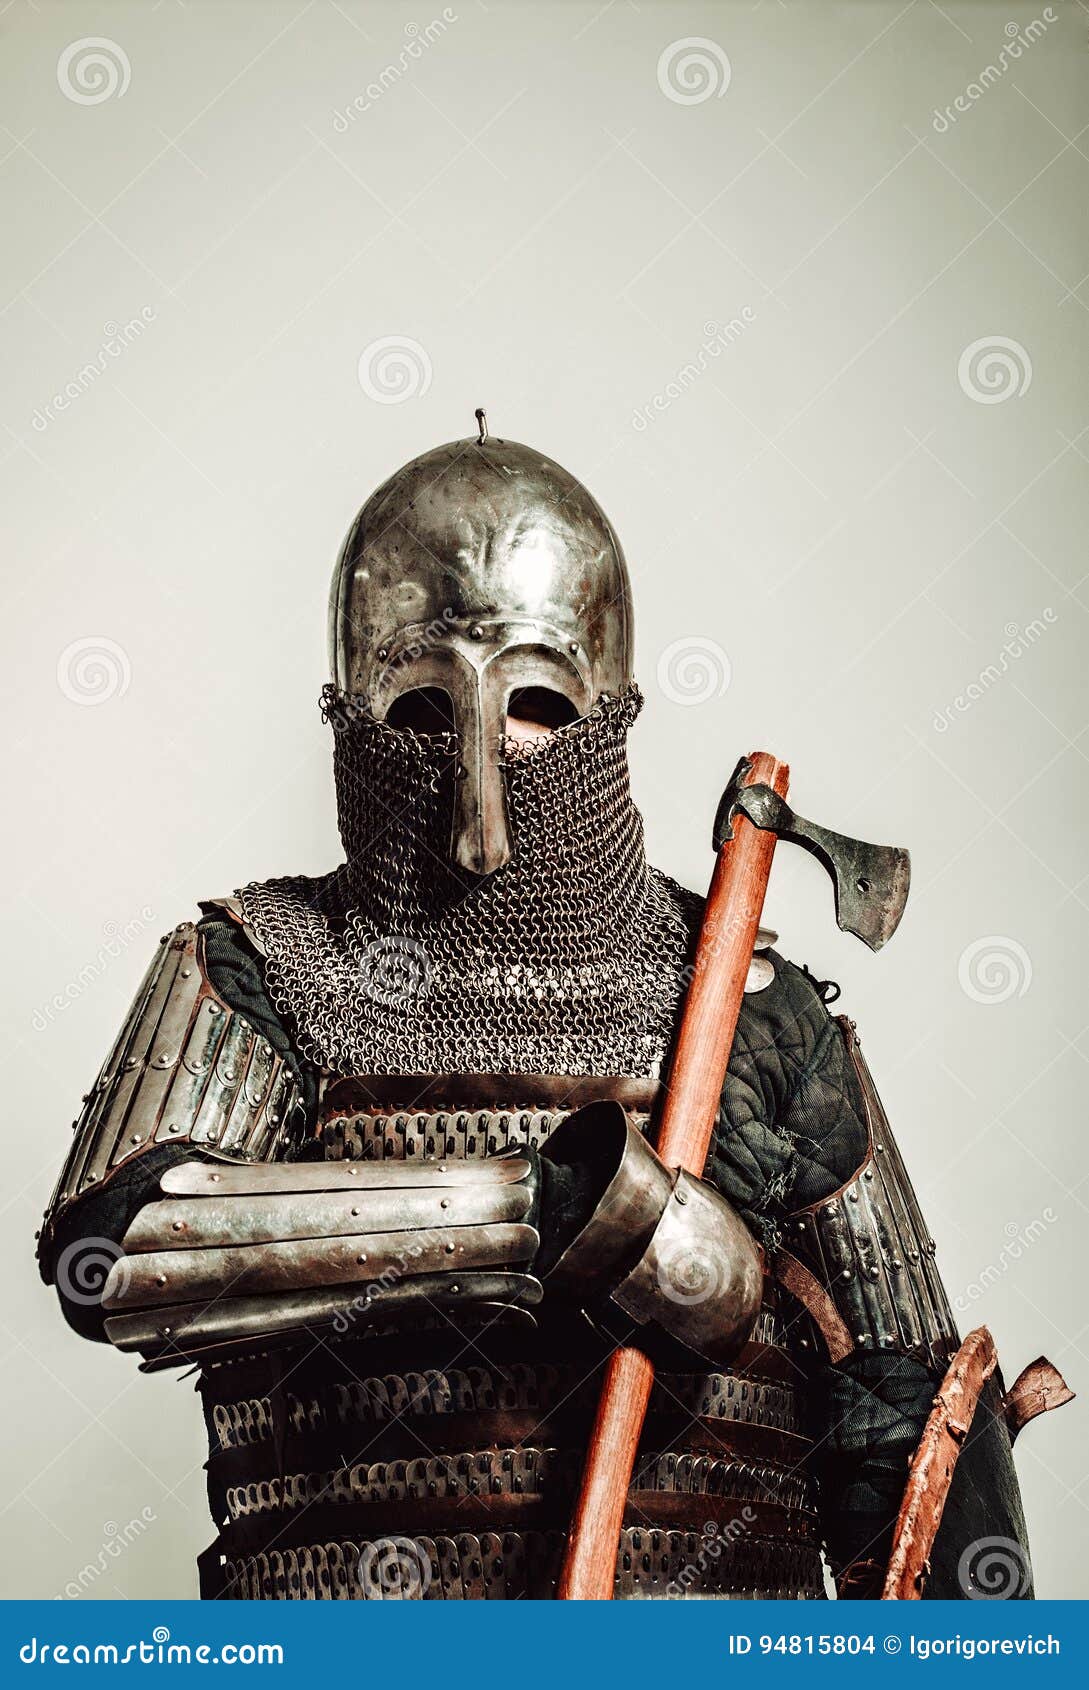 medieval-warrior-kievan-rus-heavy-armored-russian-late-years-appearance-based-burial-sotnik-grand-prince-kiev-94815804.jpg